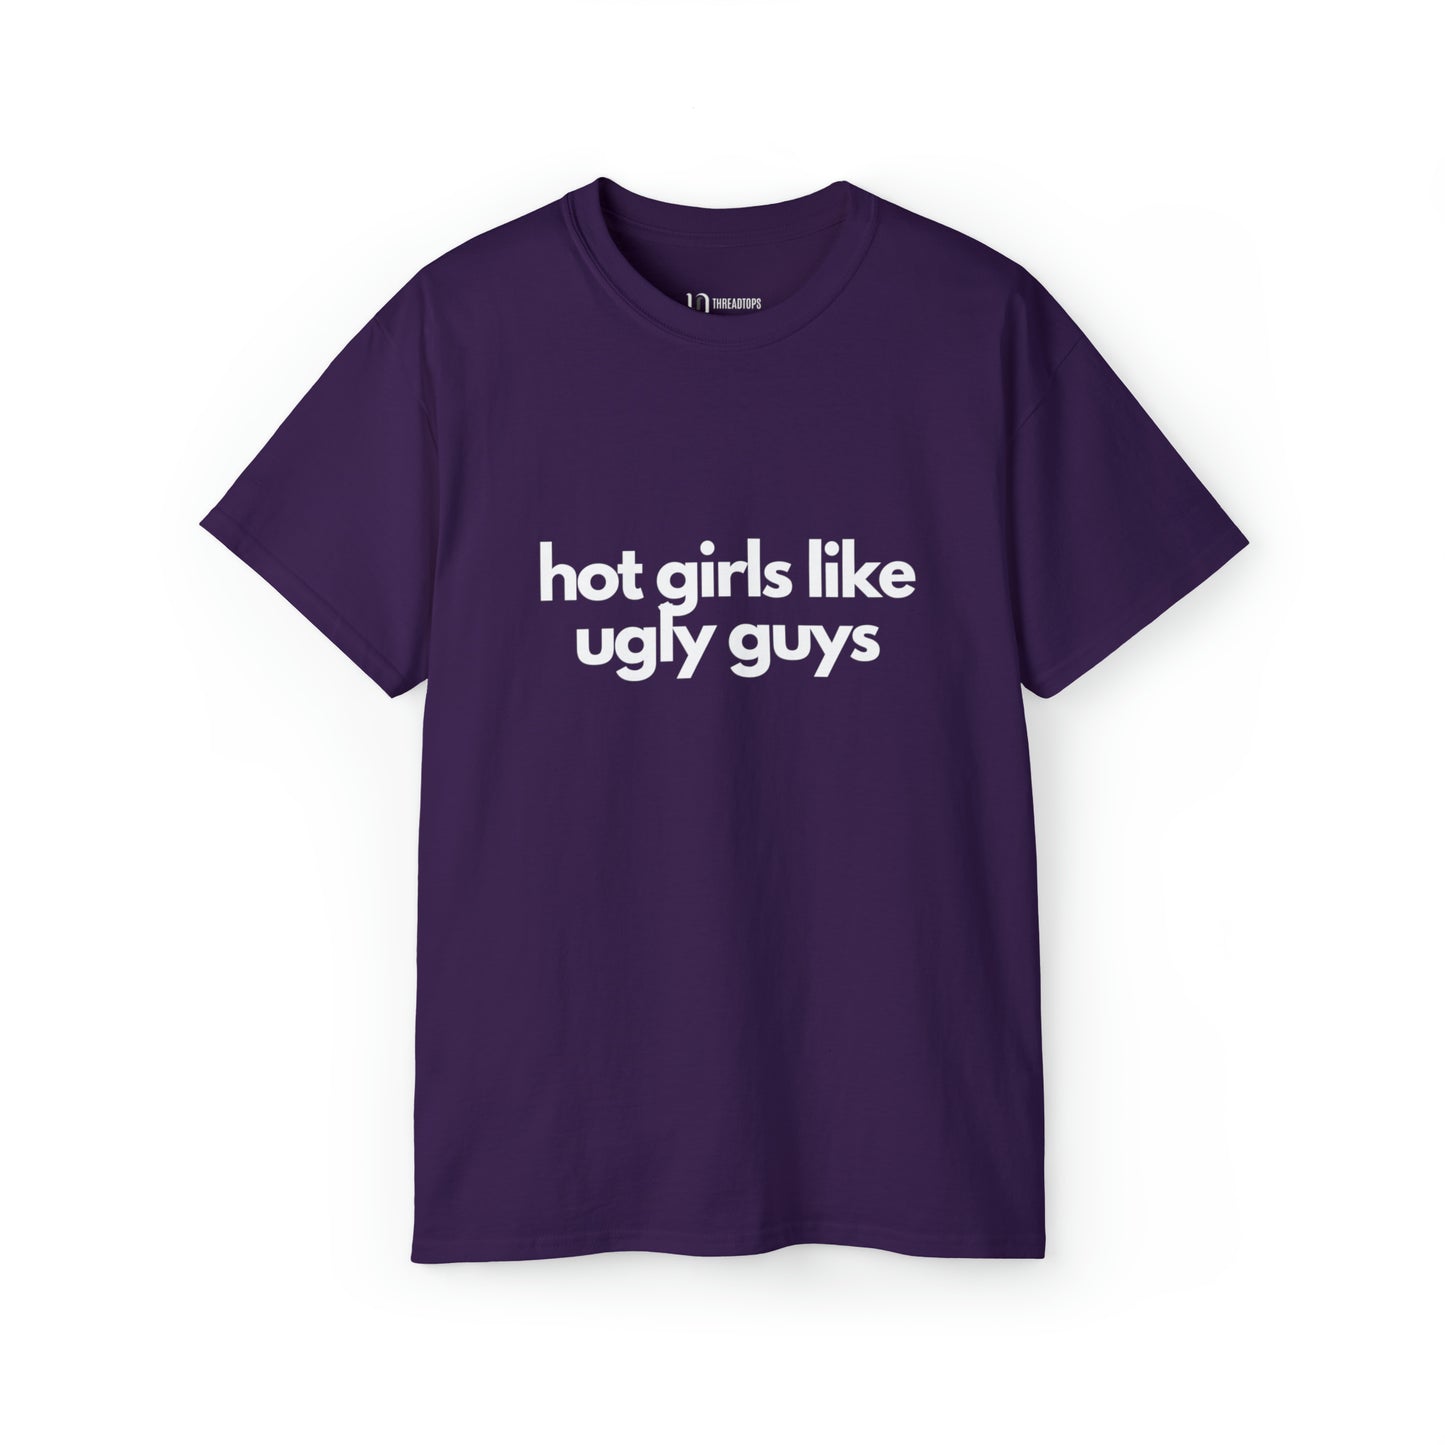 Hot girls like ugly guys | Tee